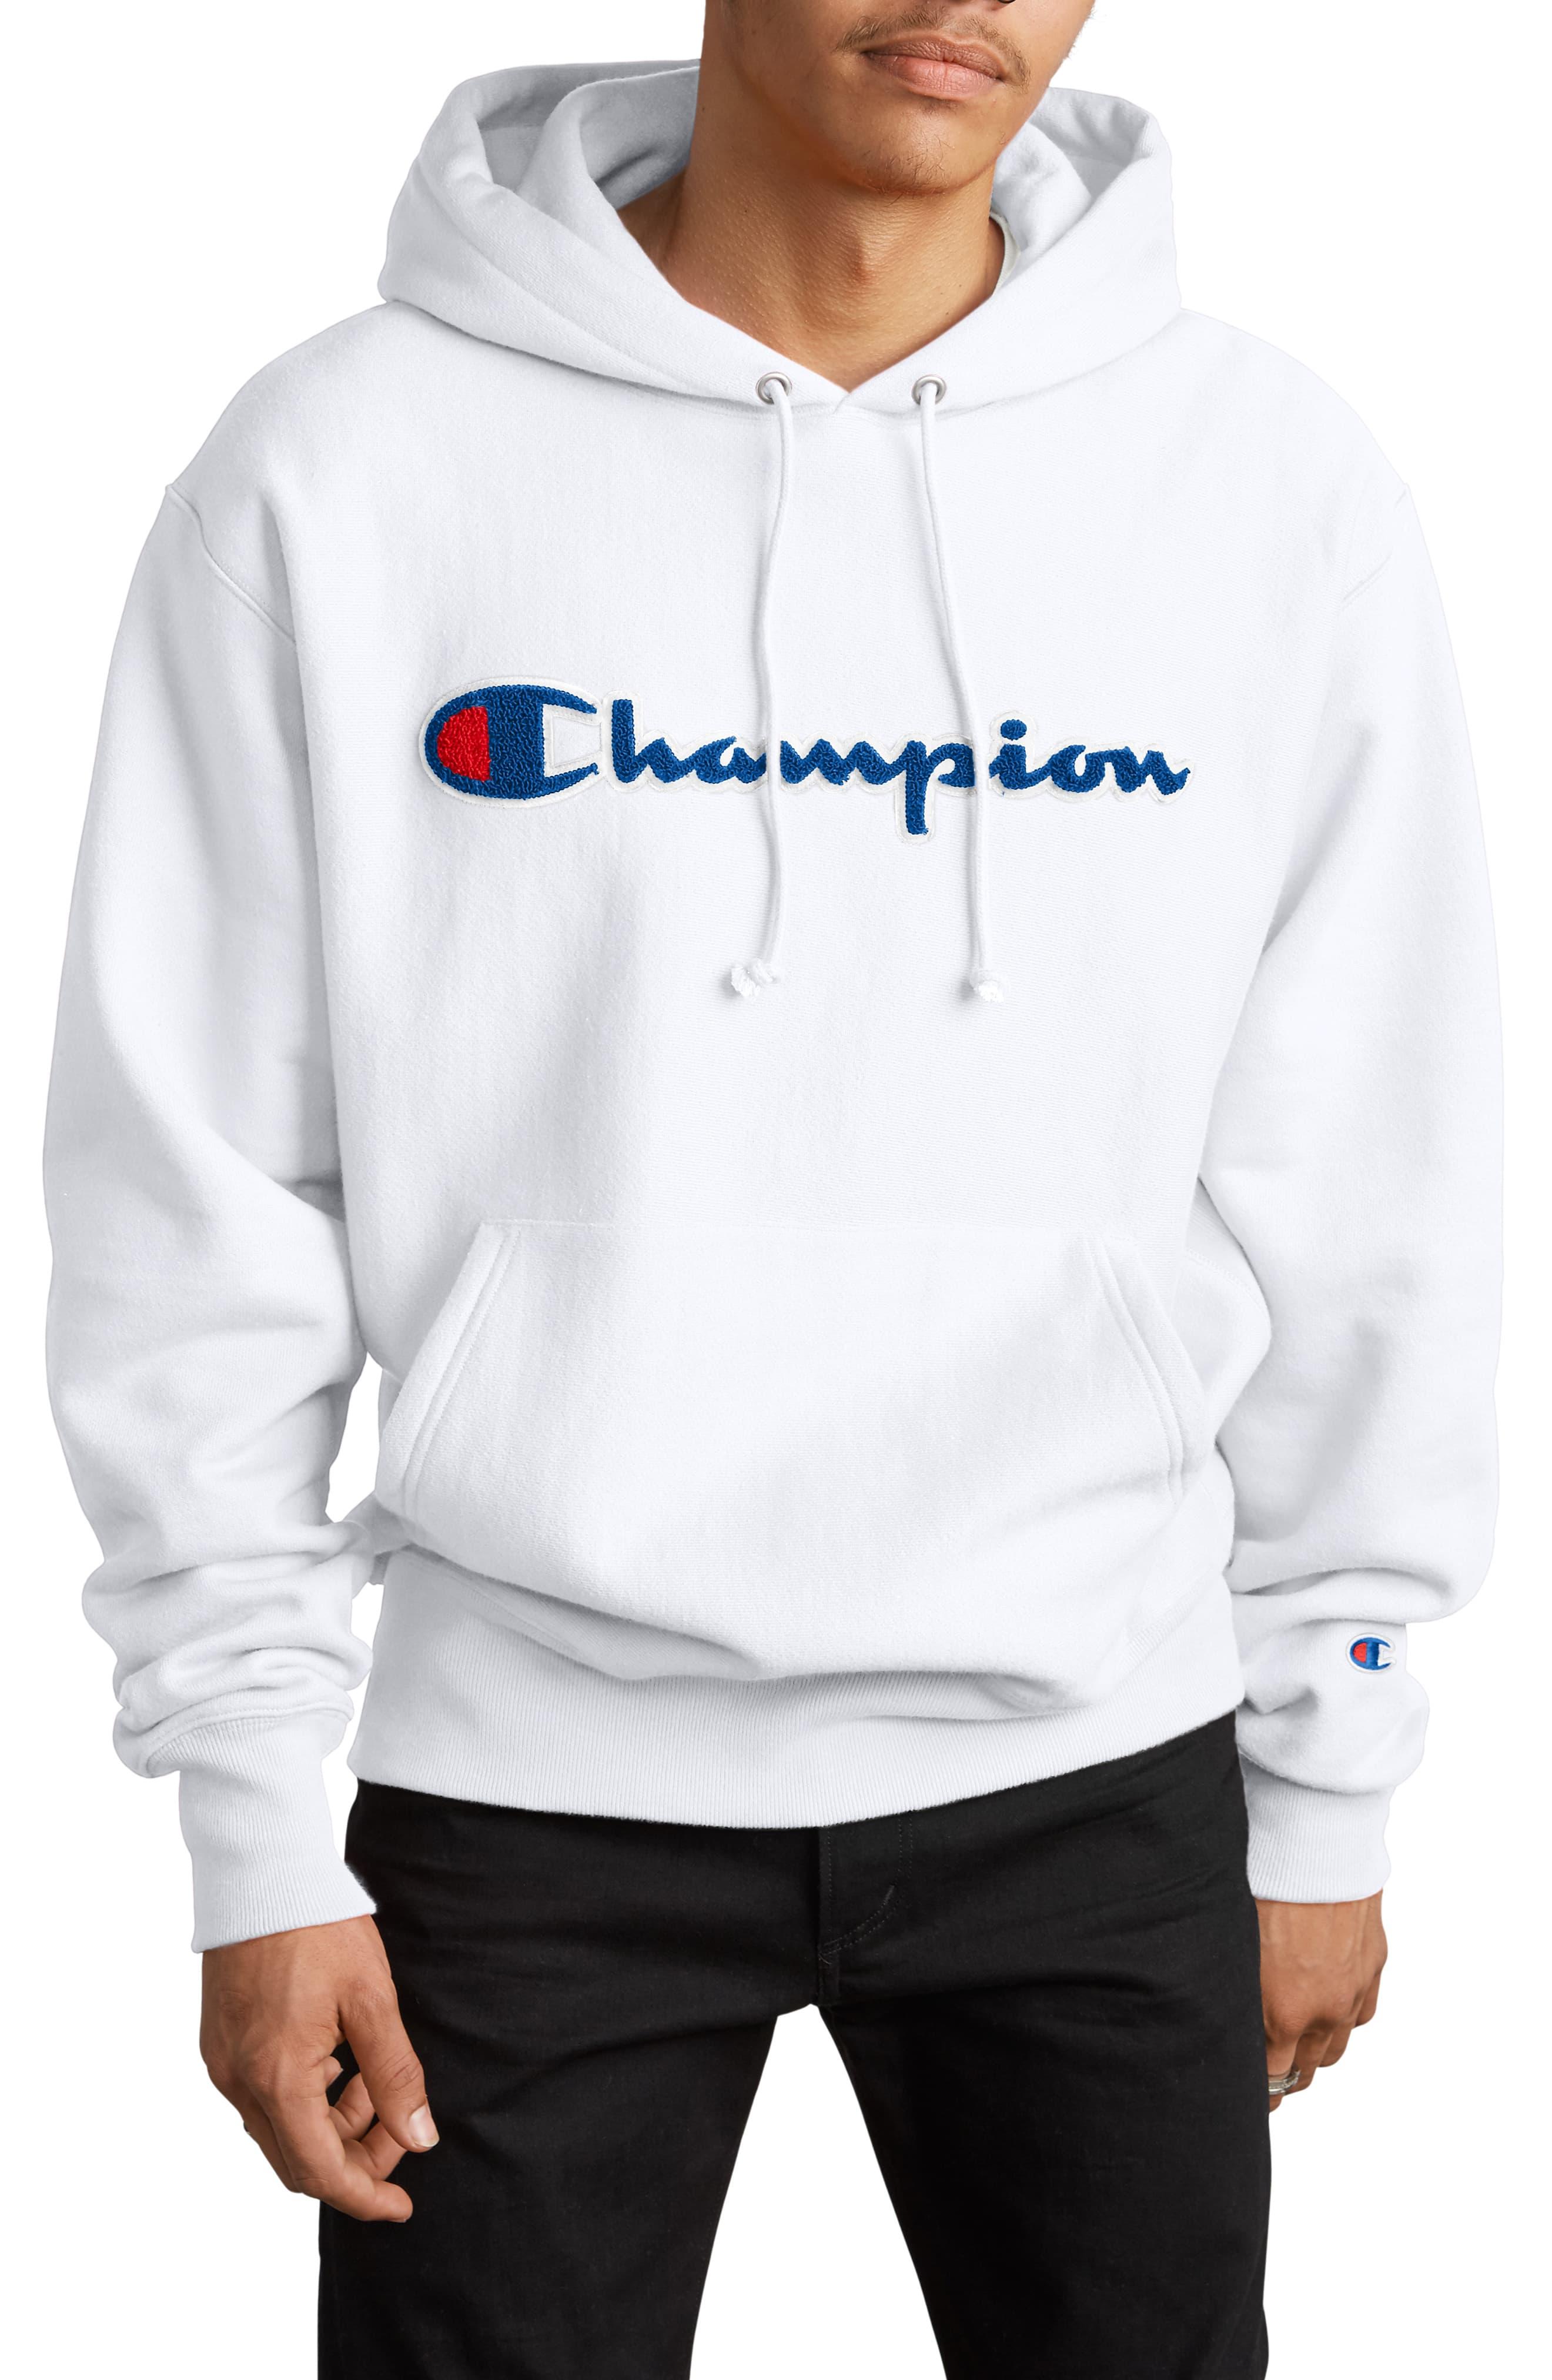 white champion hoodie for men